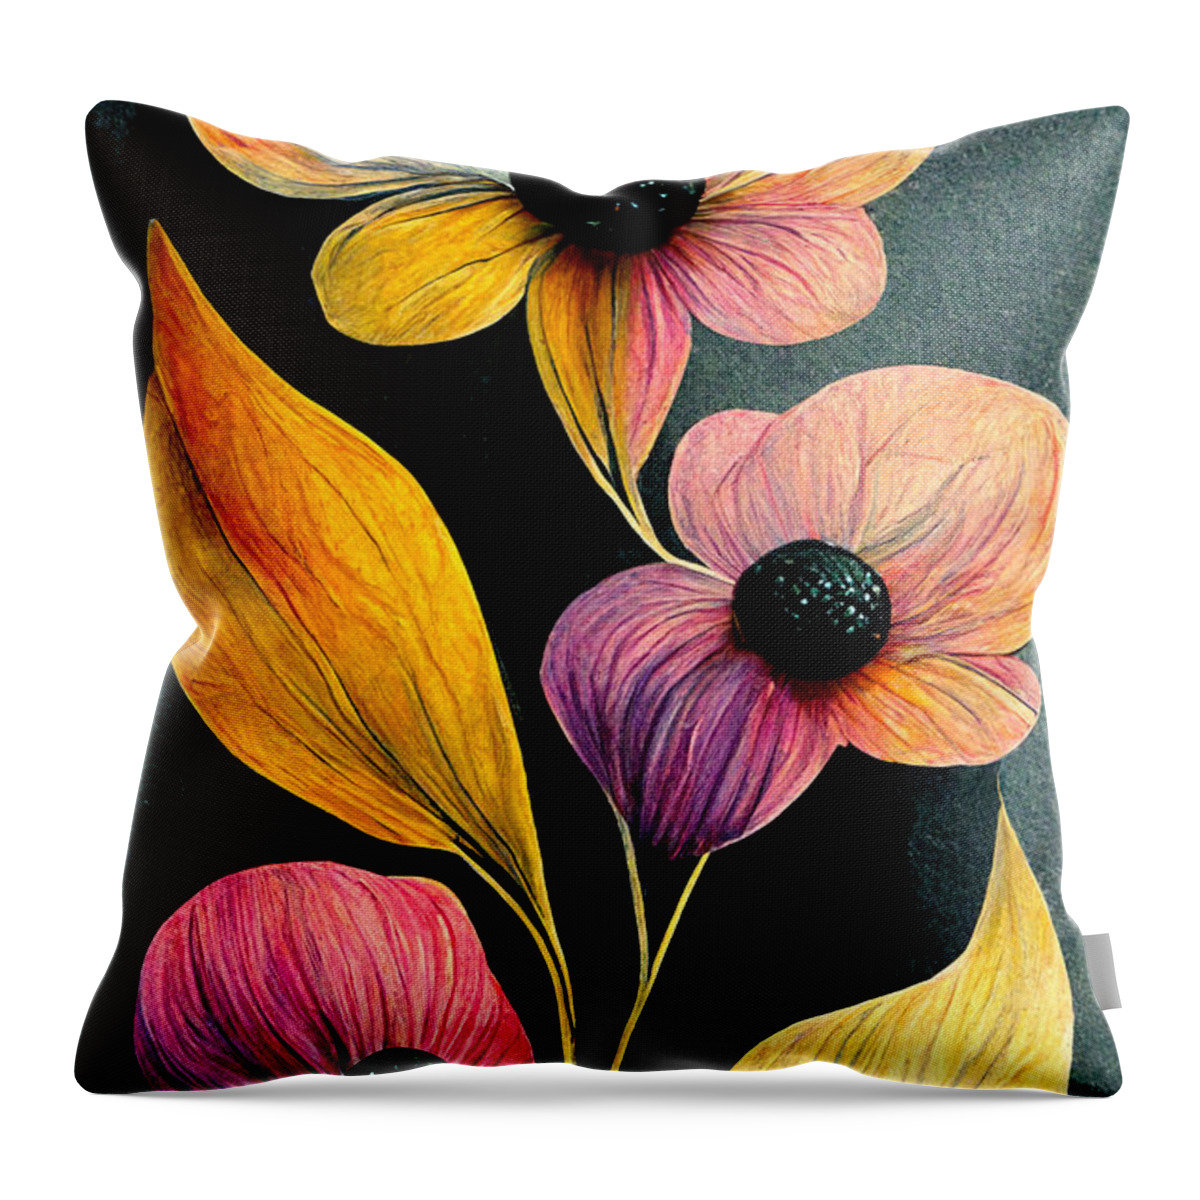 Crayon Throw Pillow featuring the digital art Crayon flowers #2 by Sabantha